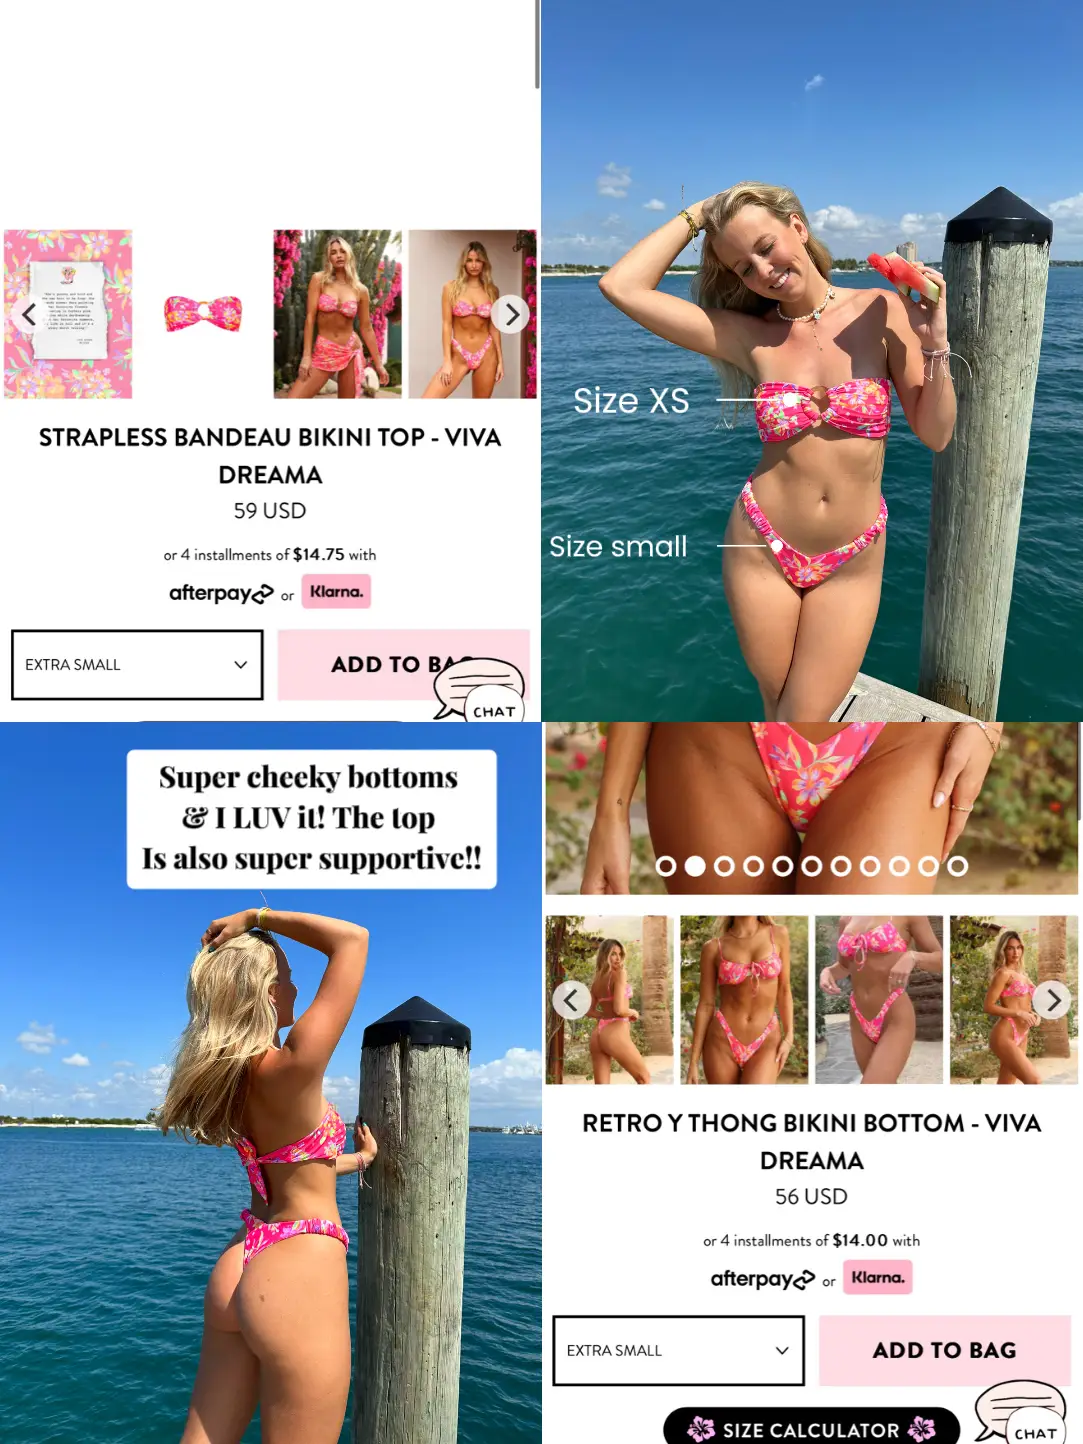 Women's Square Neck Bralette Bikini Top - Wild Fable™ Yellow S : Target